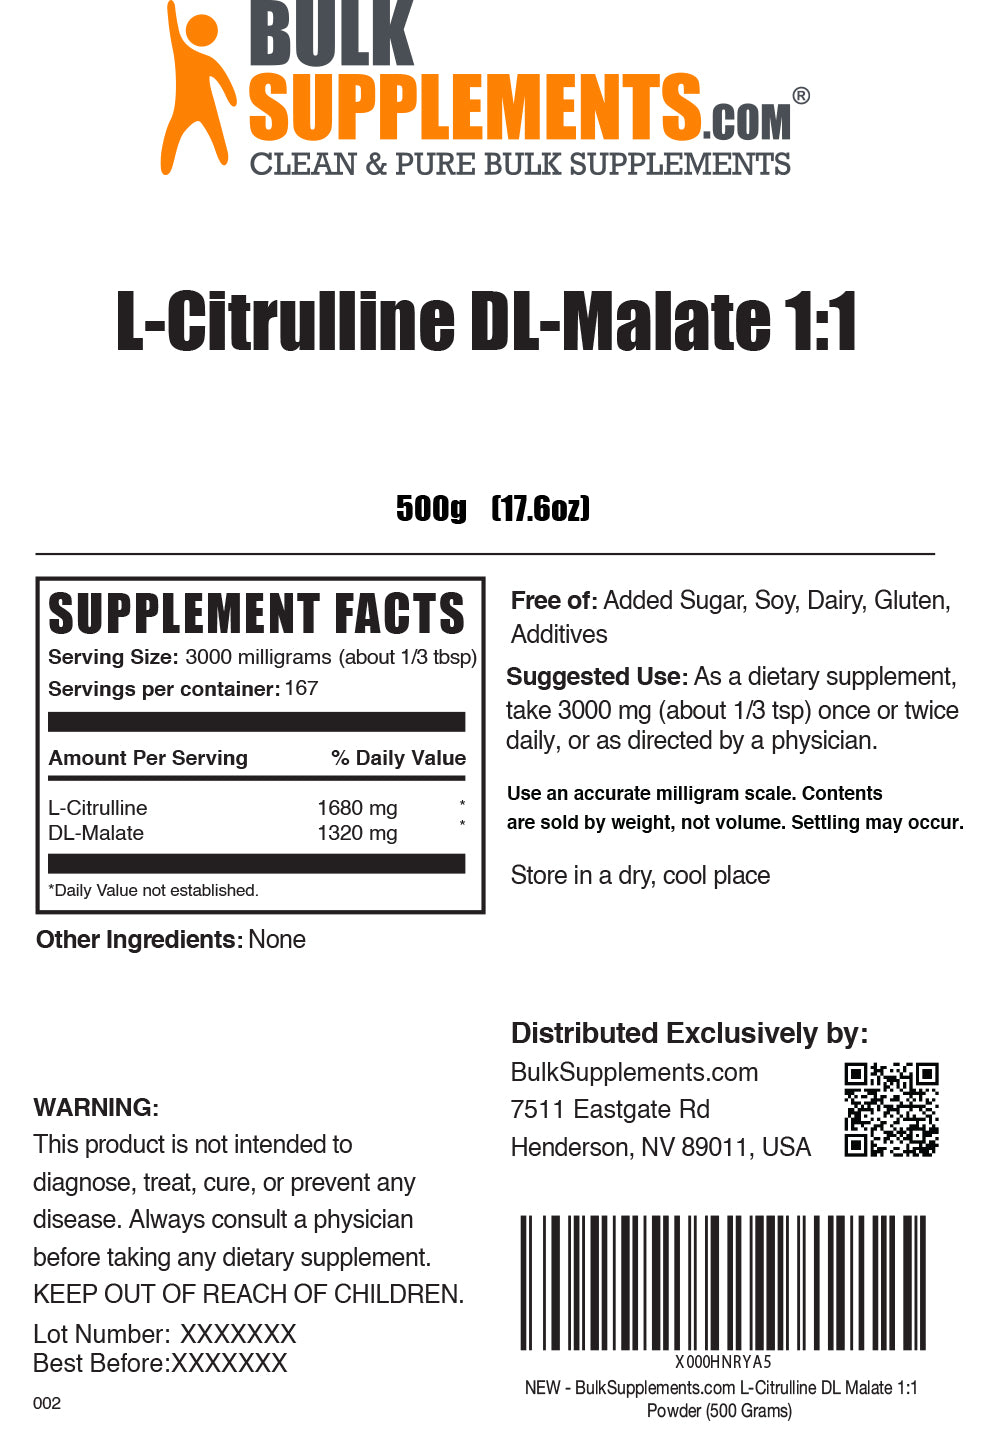 L-Citrulline powder label 500g